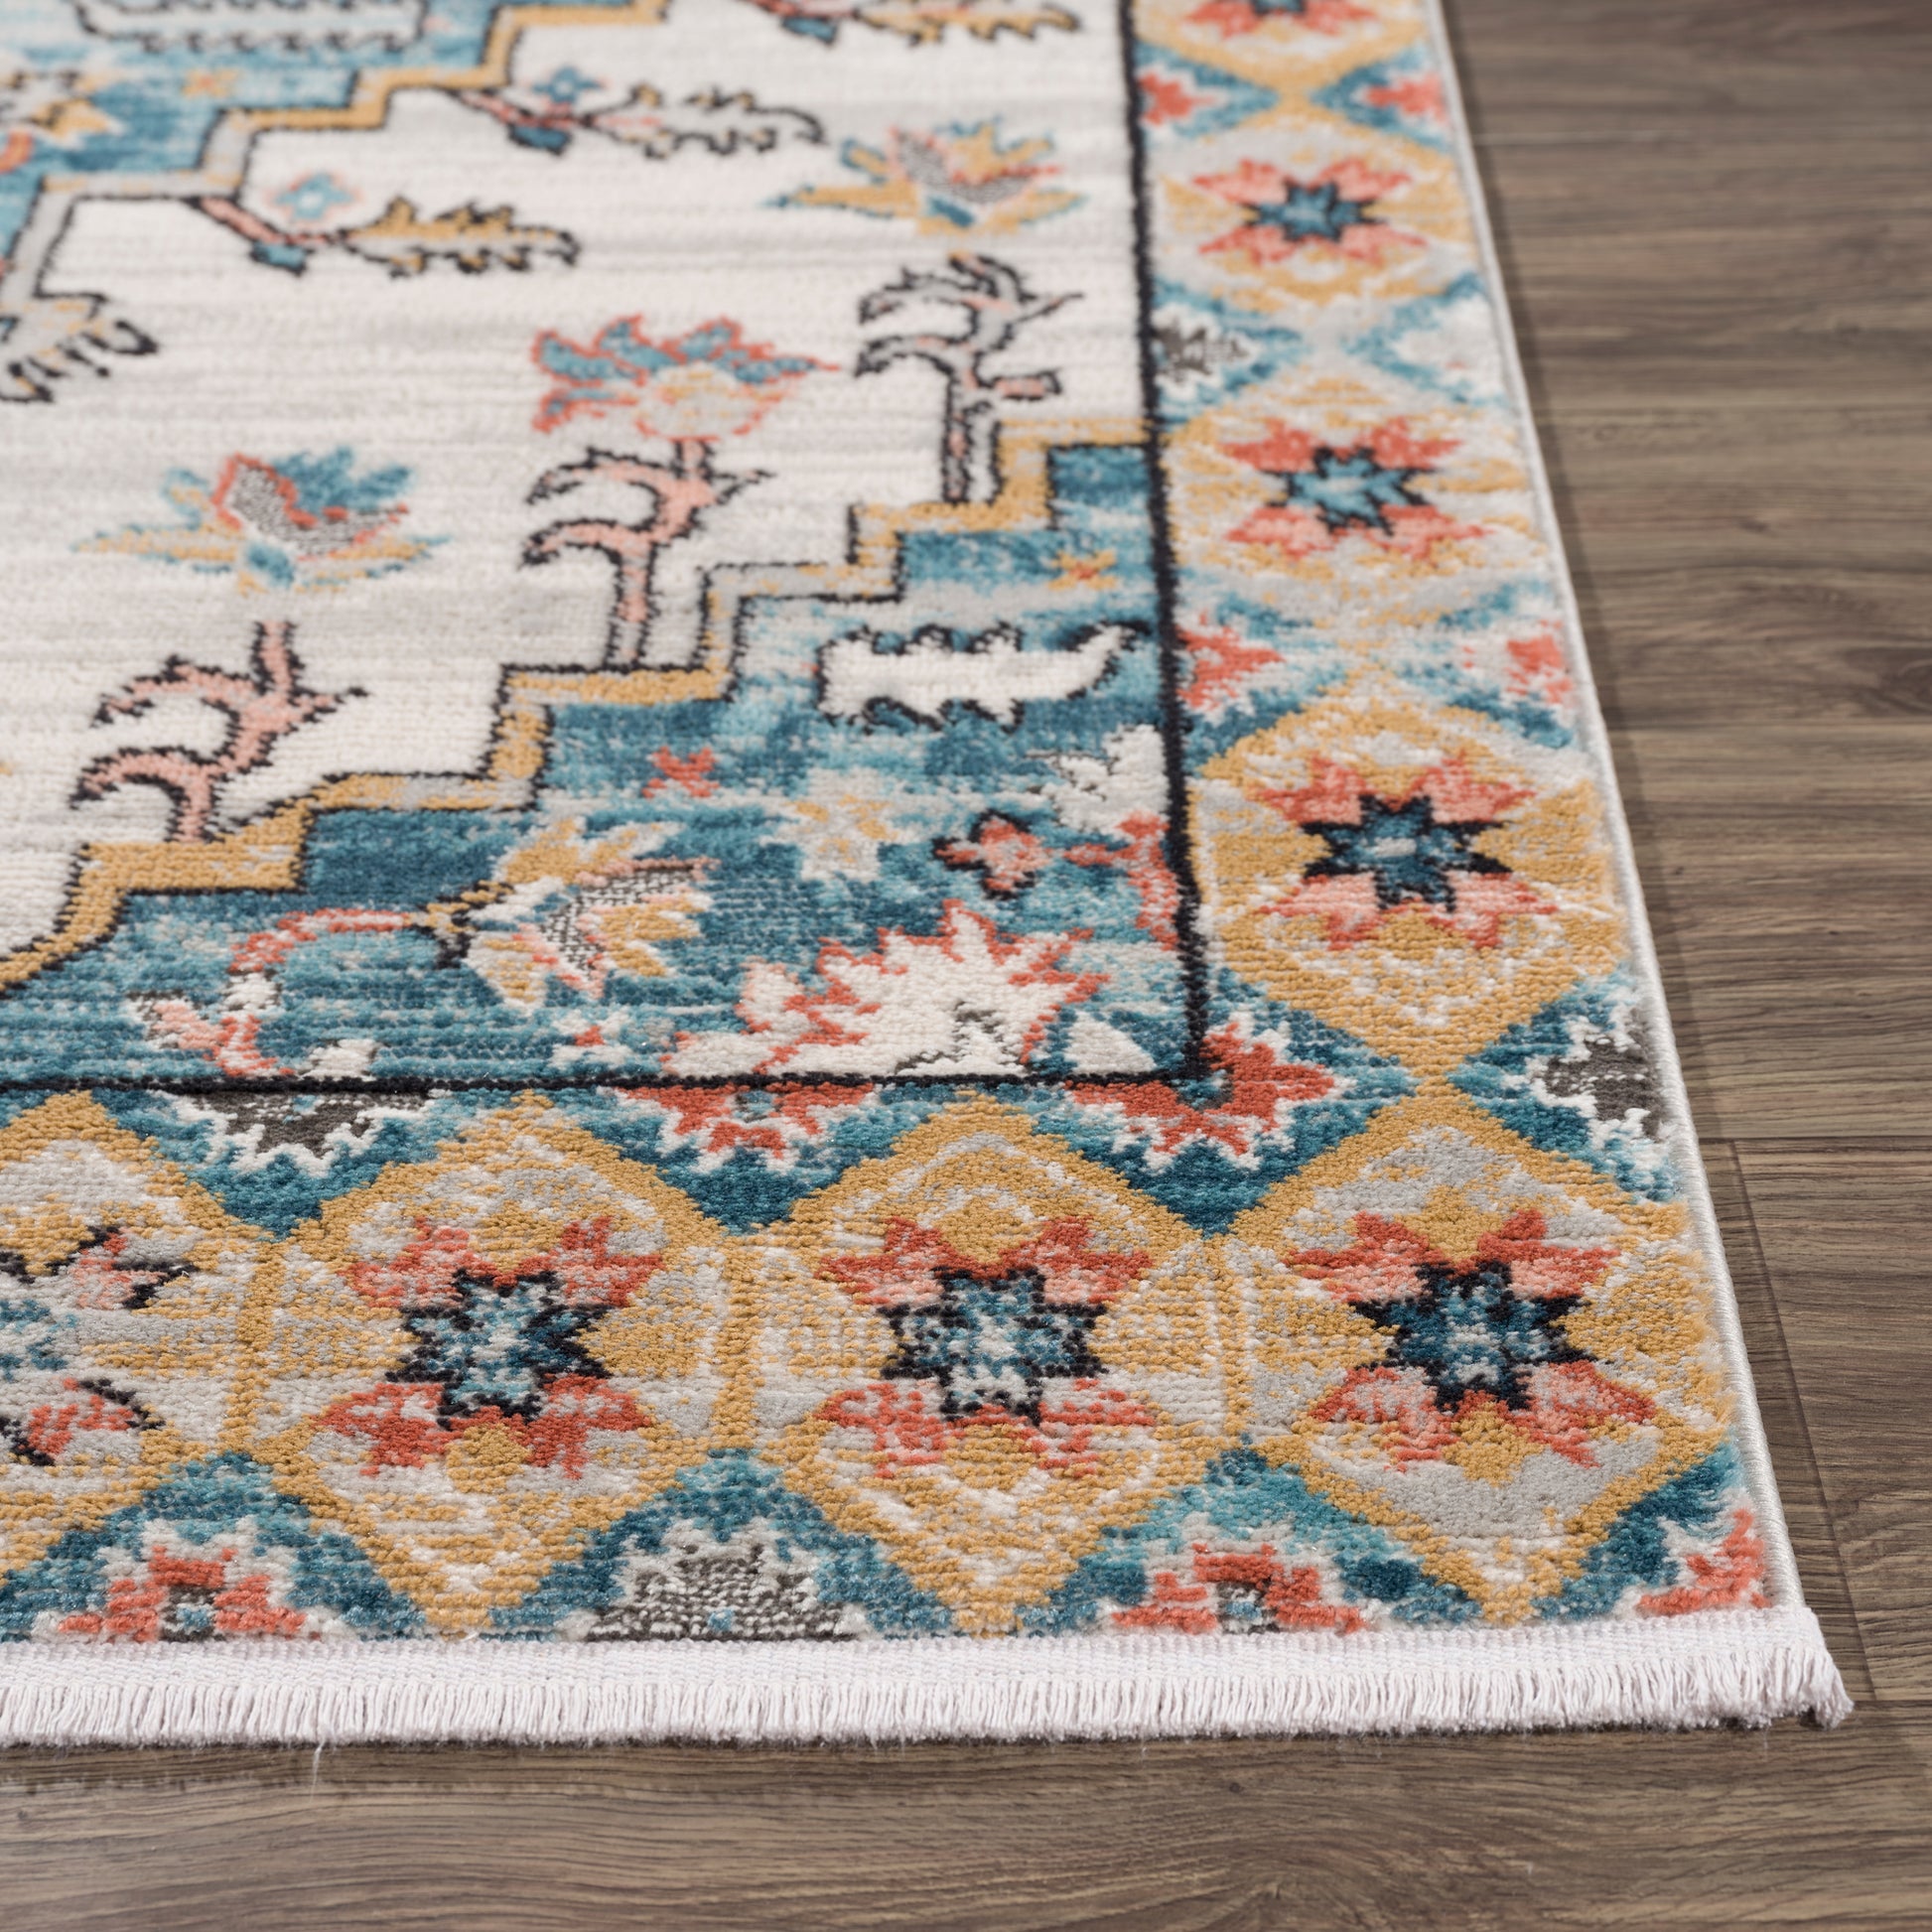 la dole rugs traditional bordered navajo vintage teal turquoise ivory red orange area rug 8x10, 8x11 ft Large Living Room Carpet, Bedroom, Kitchen